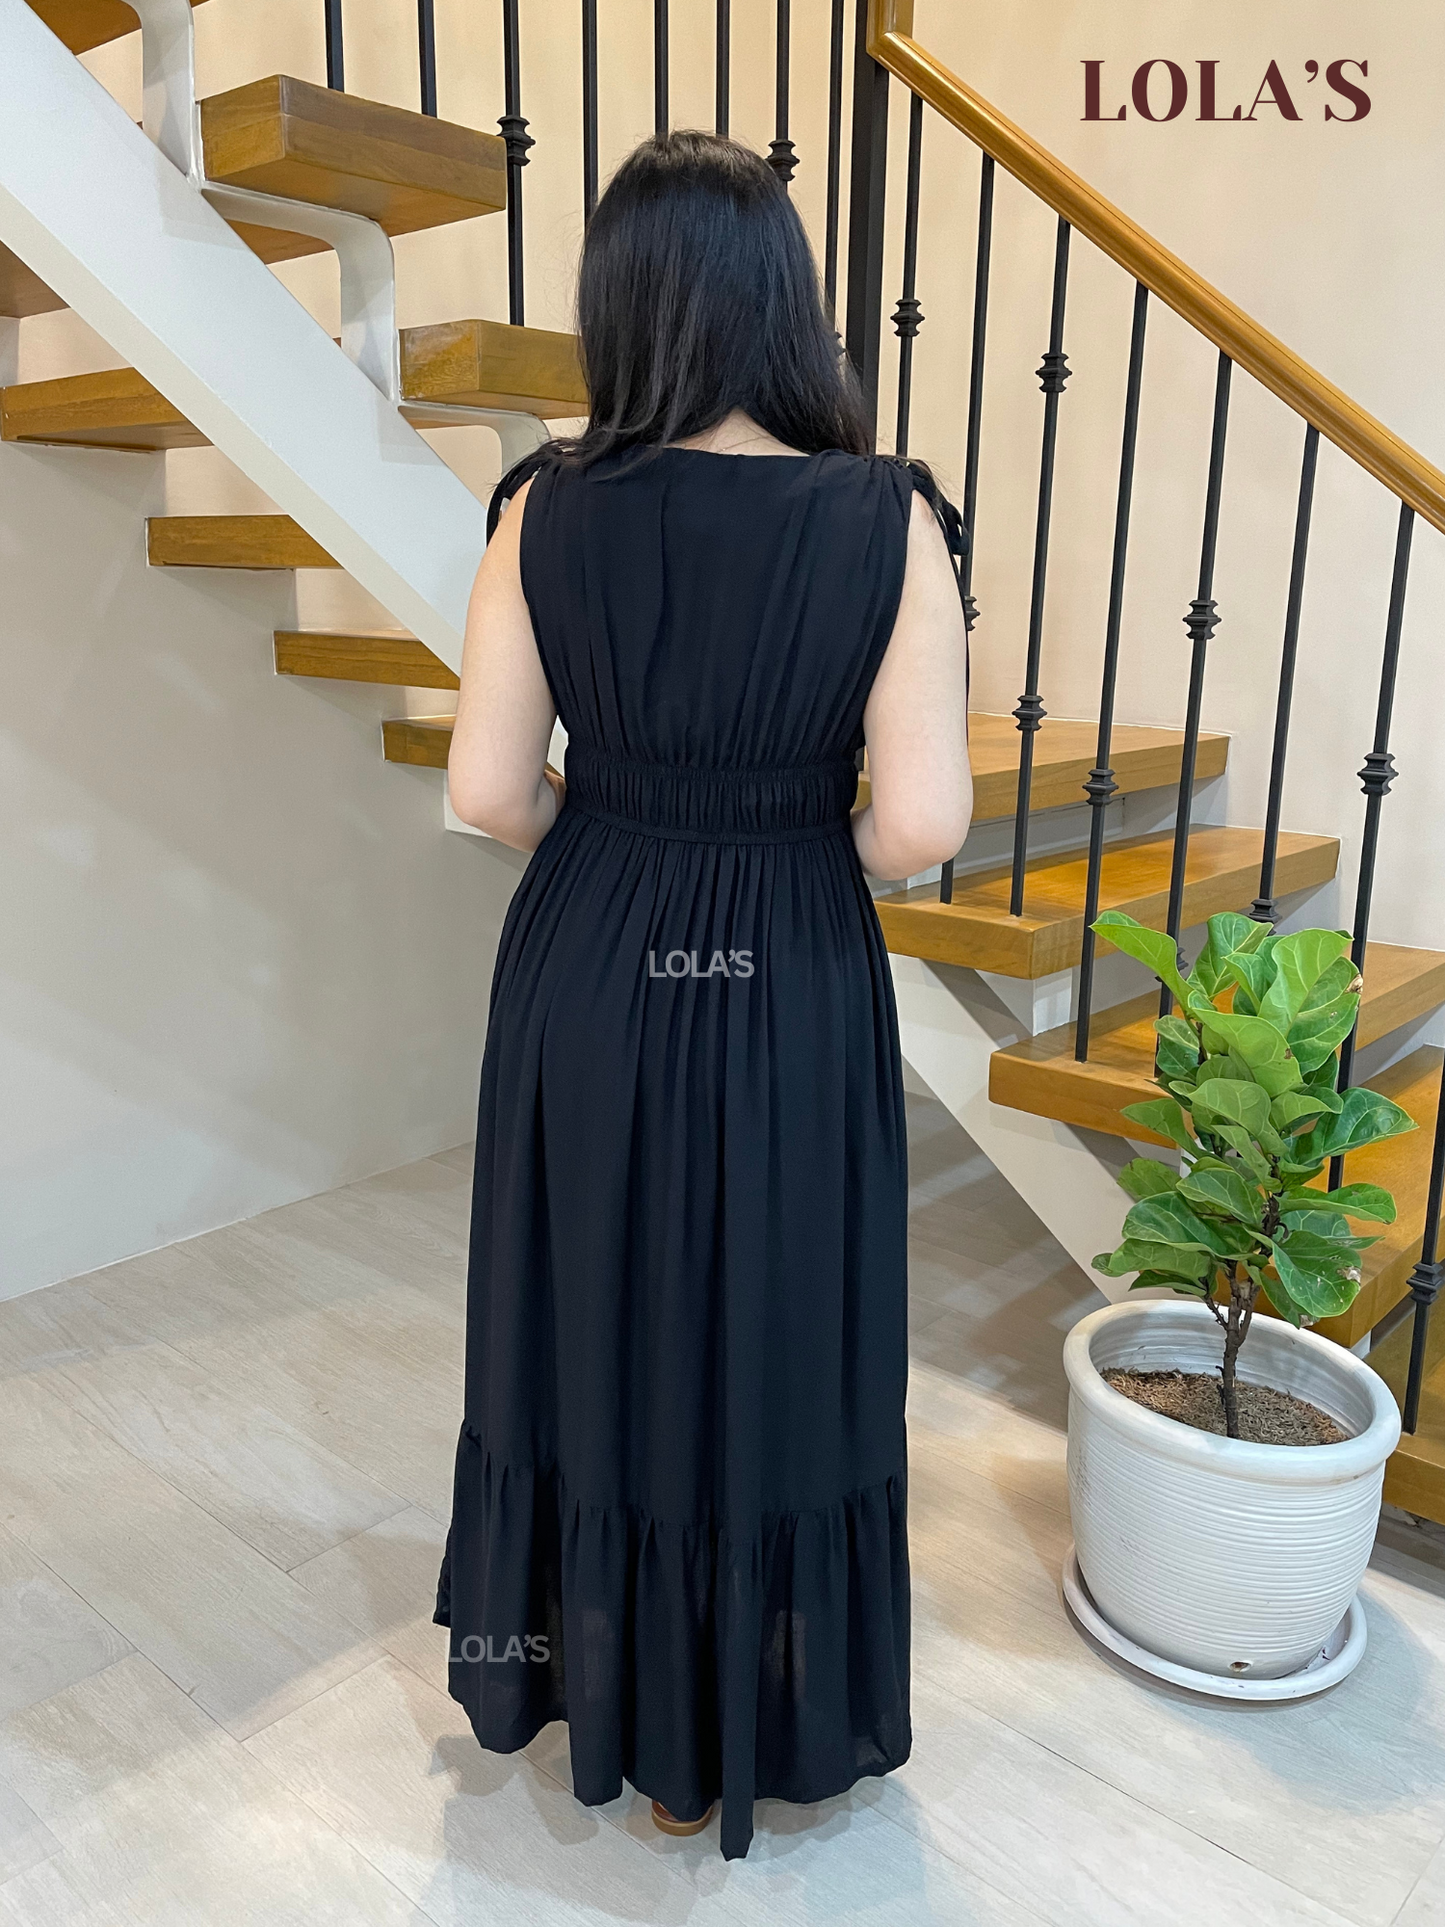 Adeline Dress (Black)